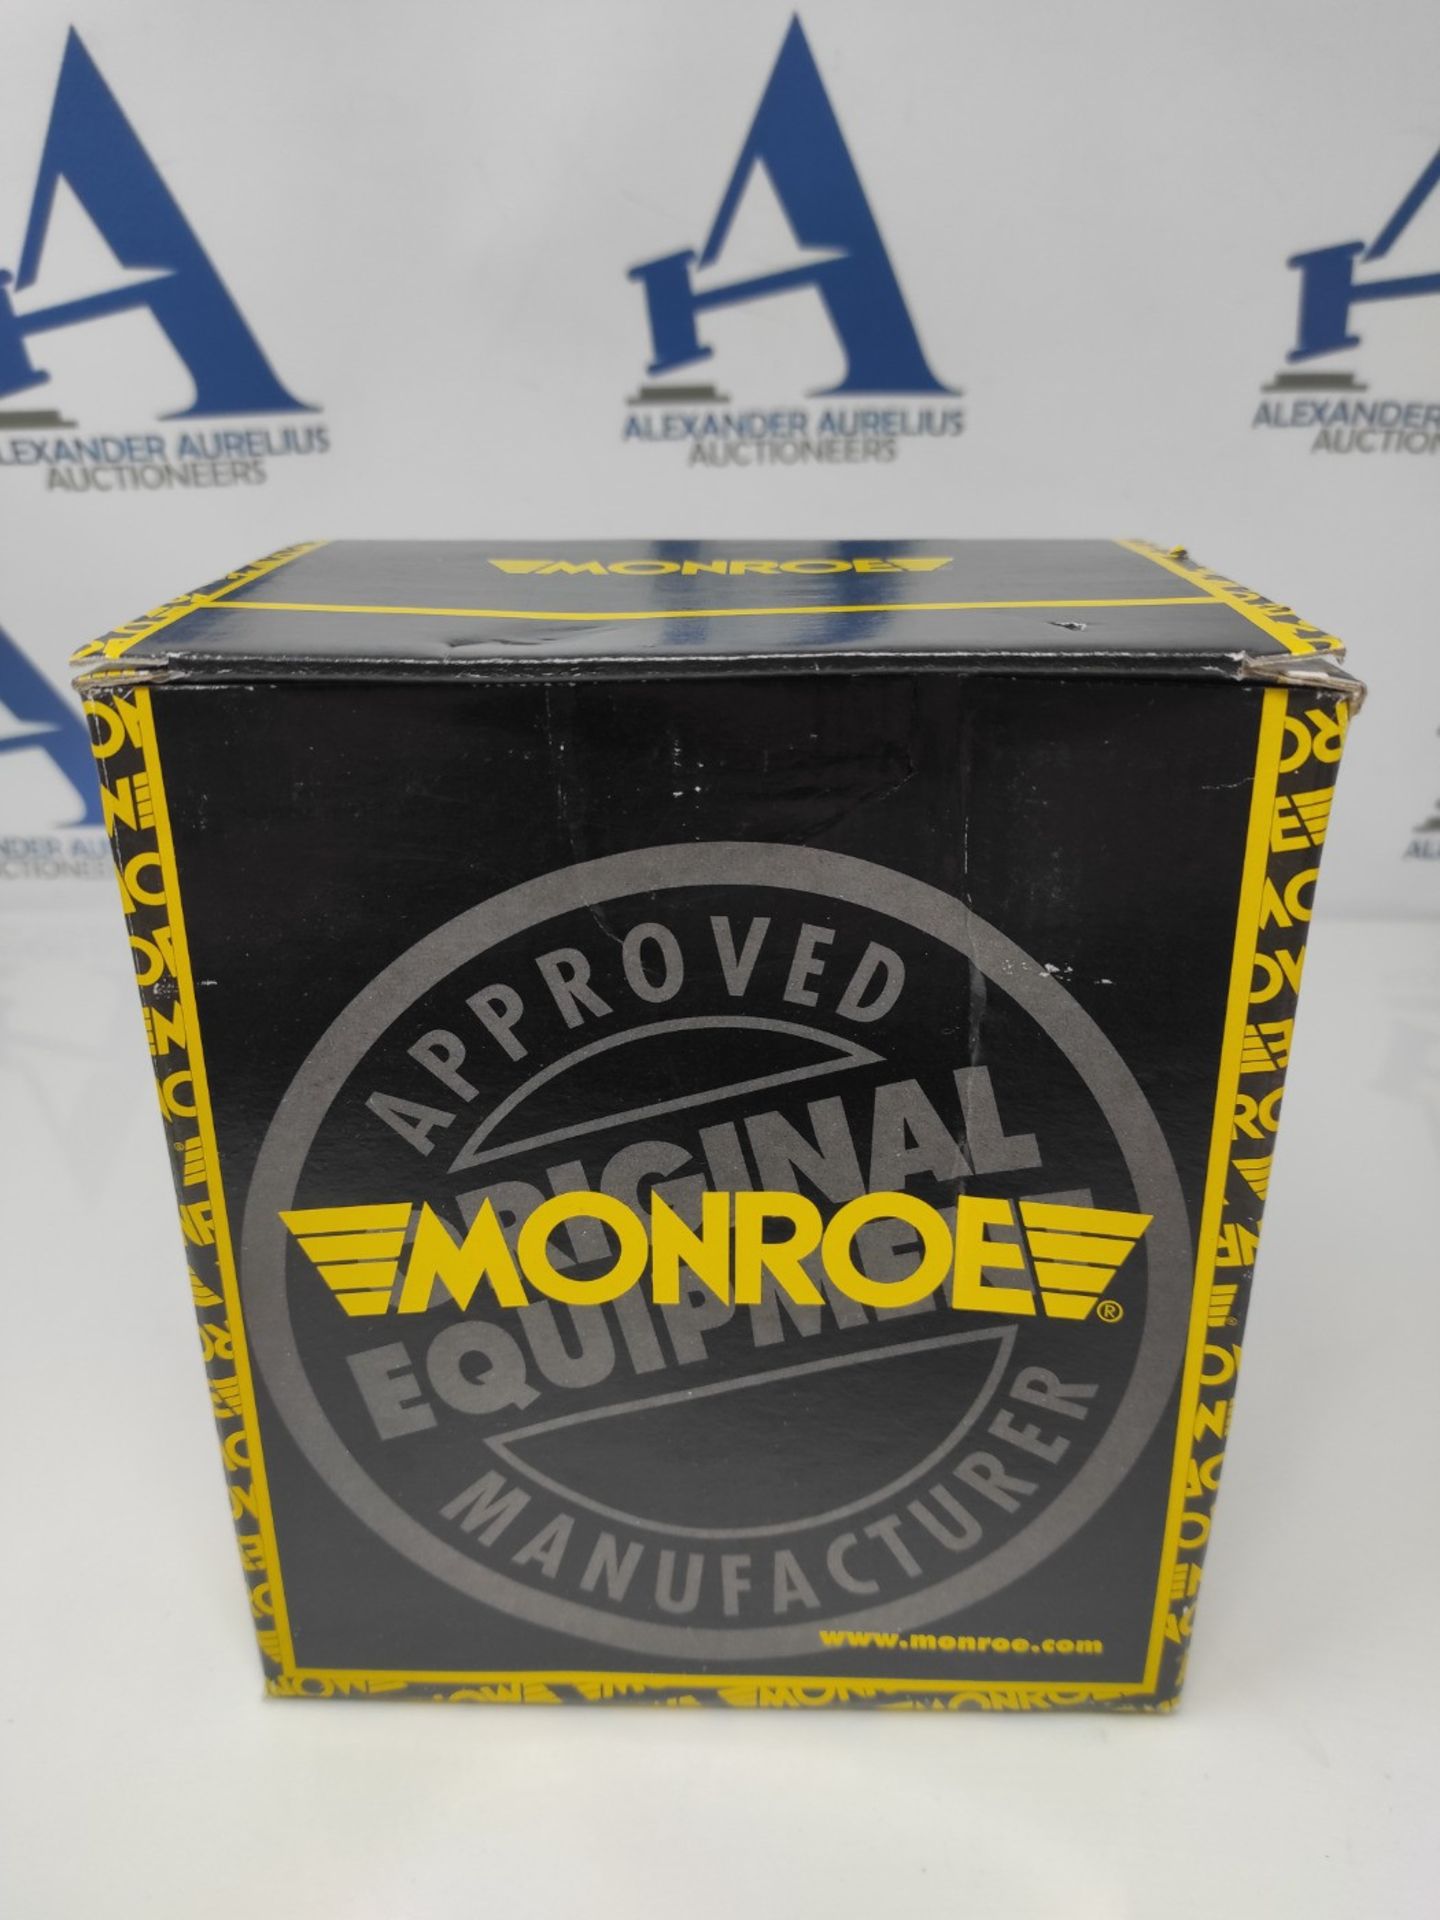 MONROE PK167 Monroe Prosthesis Kit. - Image 2 of 3